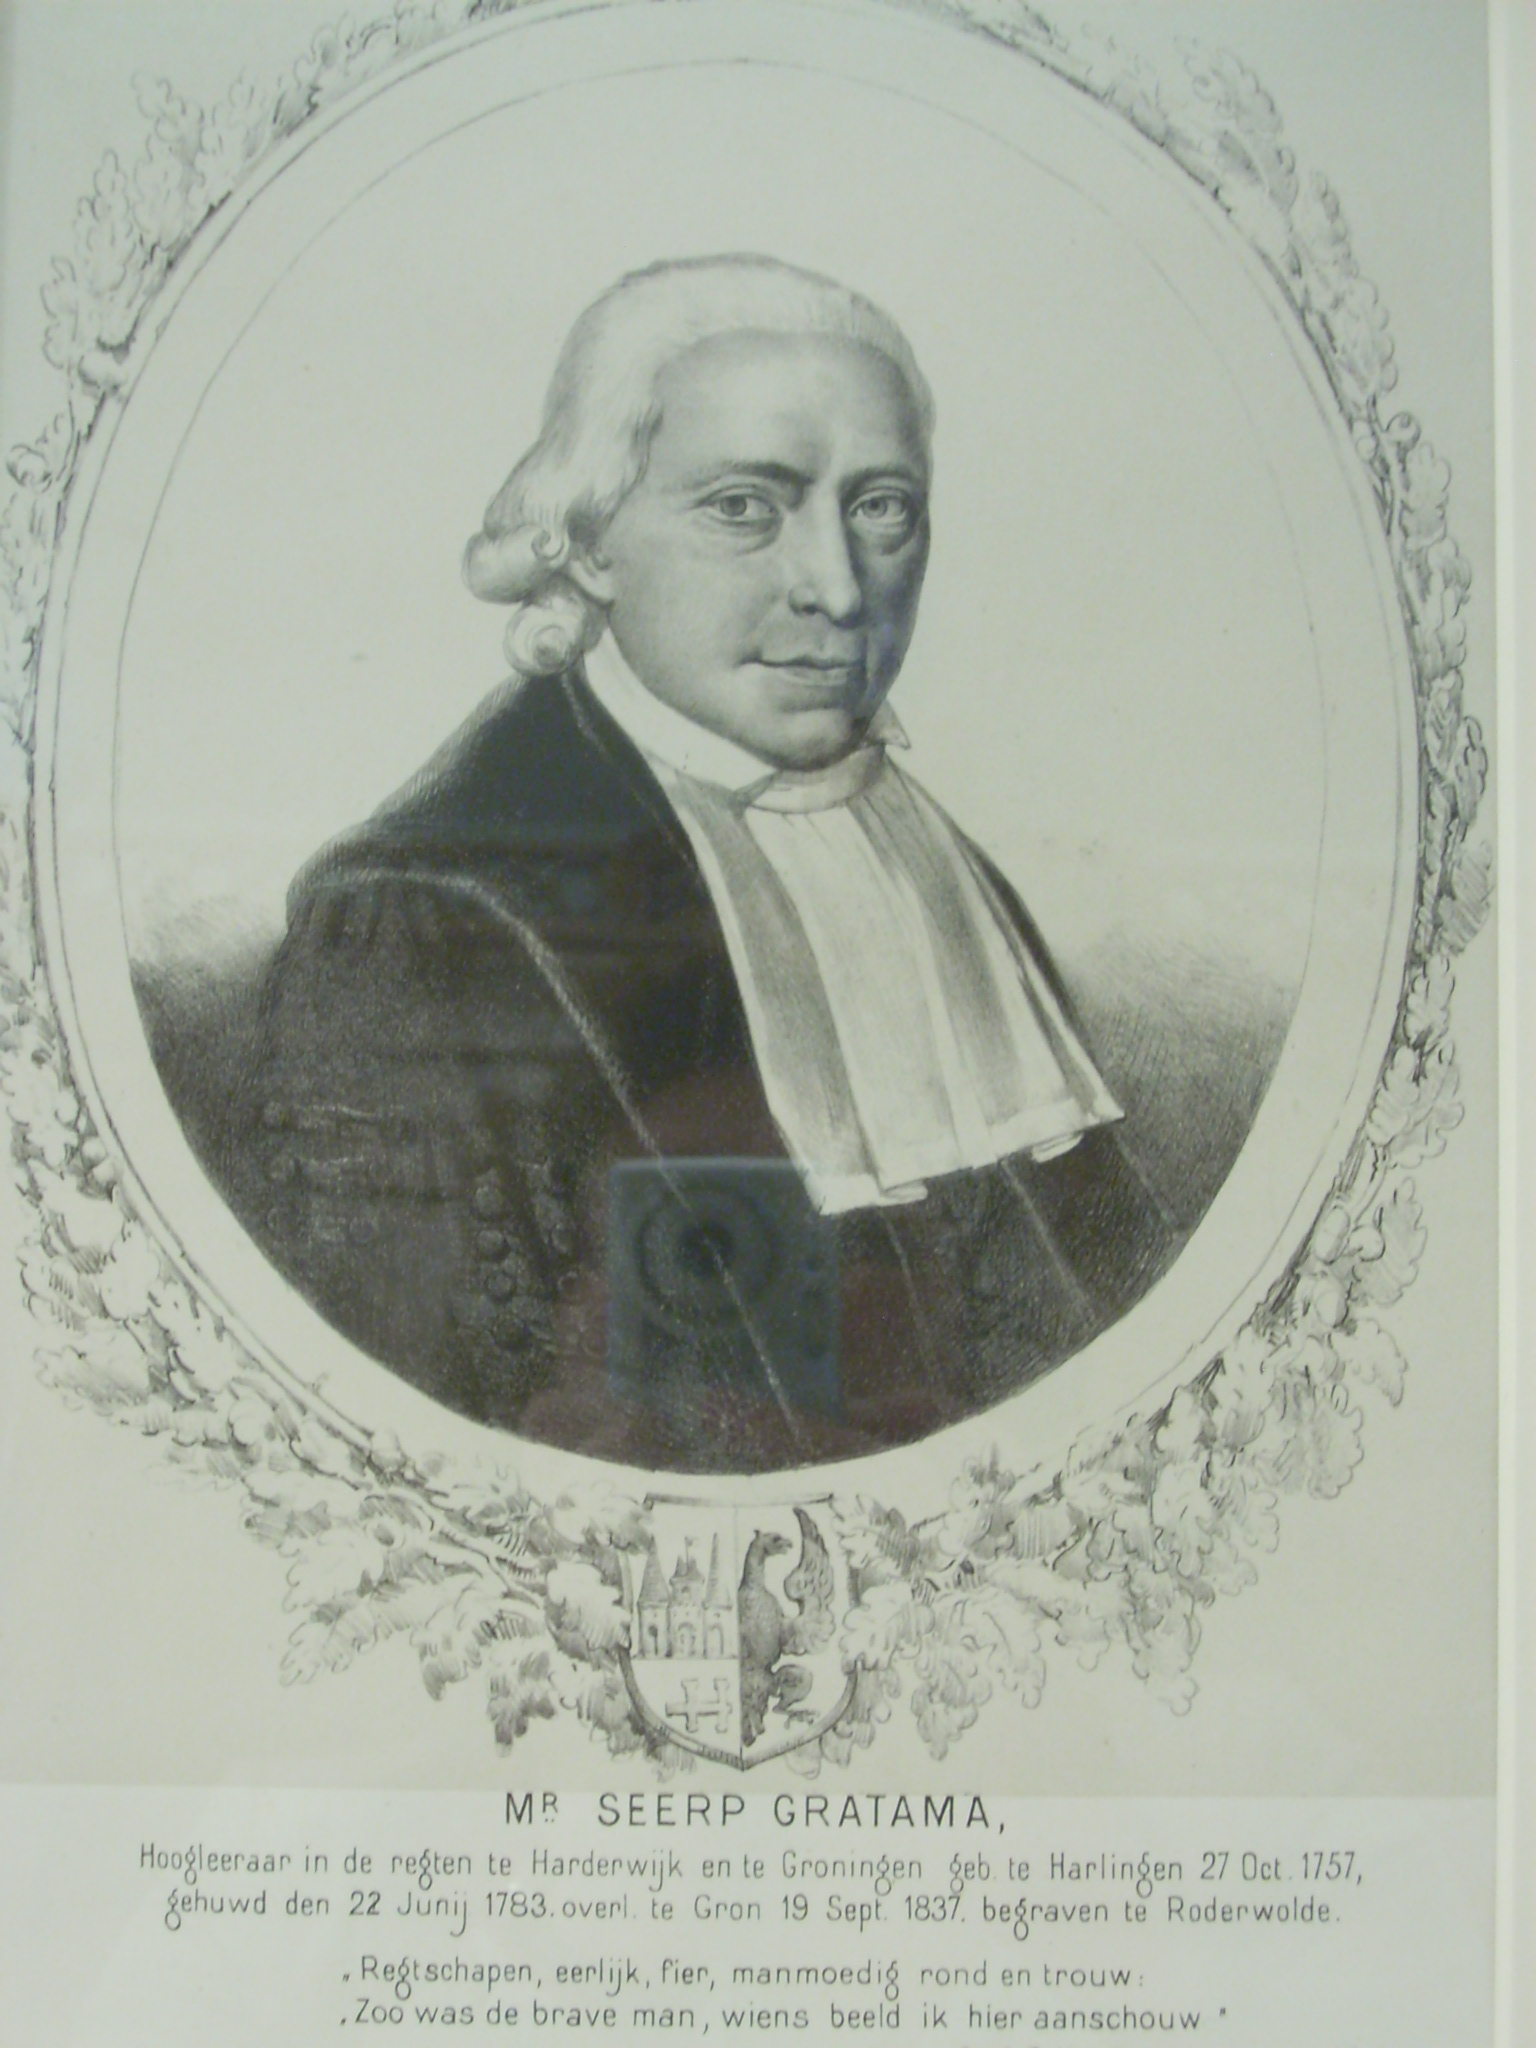 Seerp Gratama 1757-1837